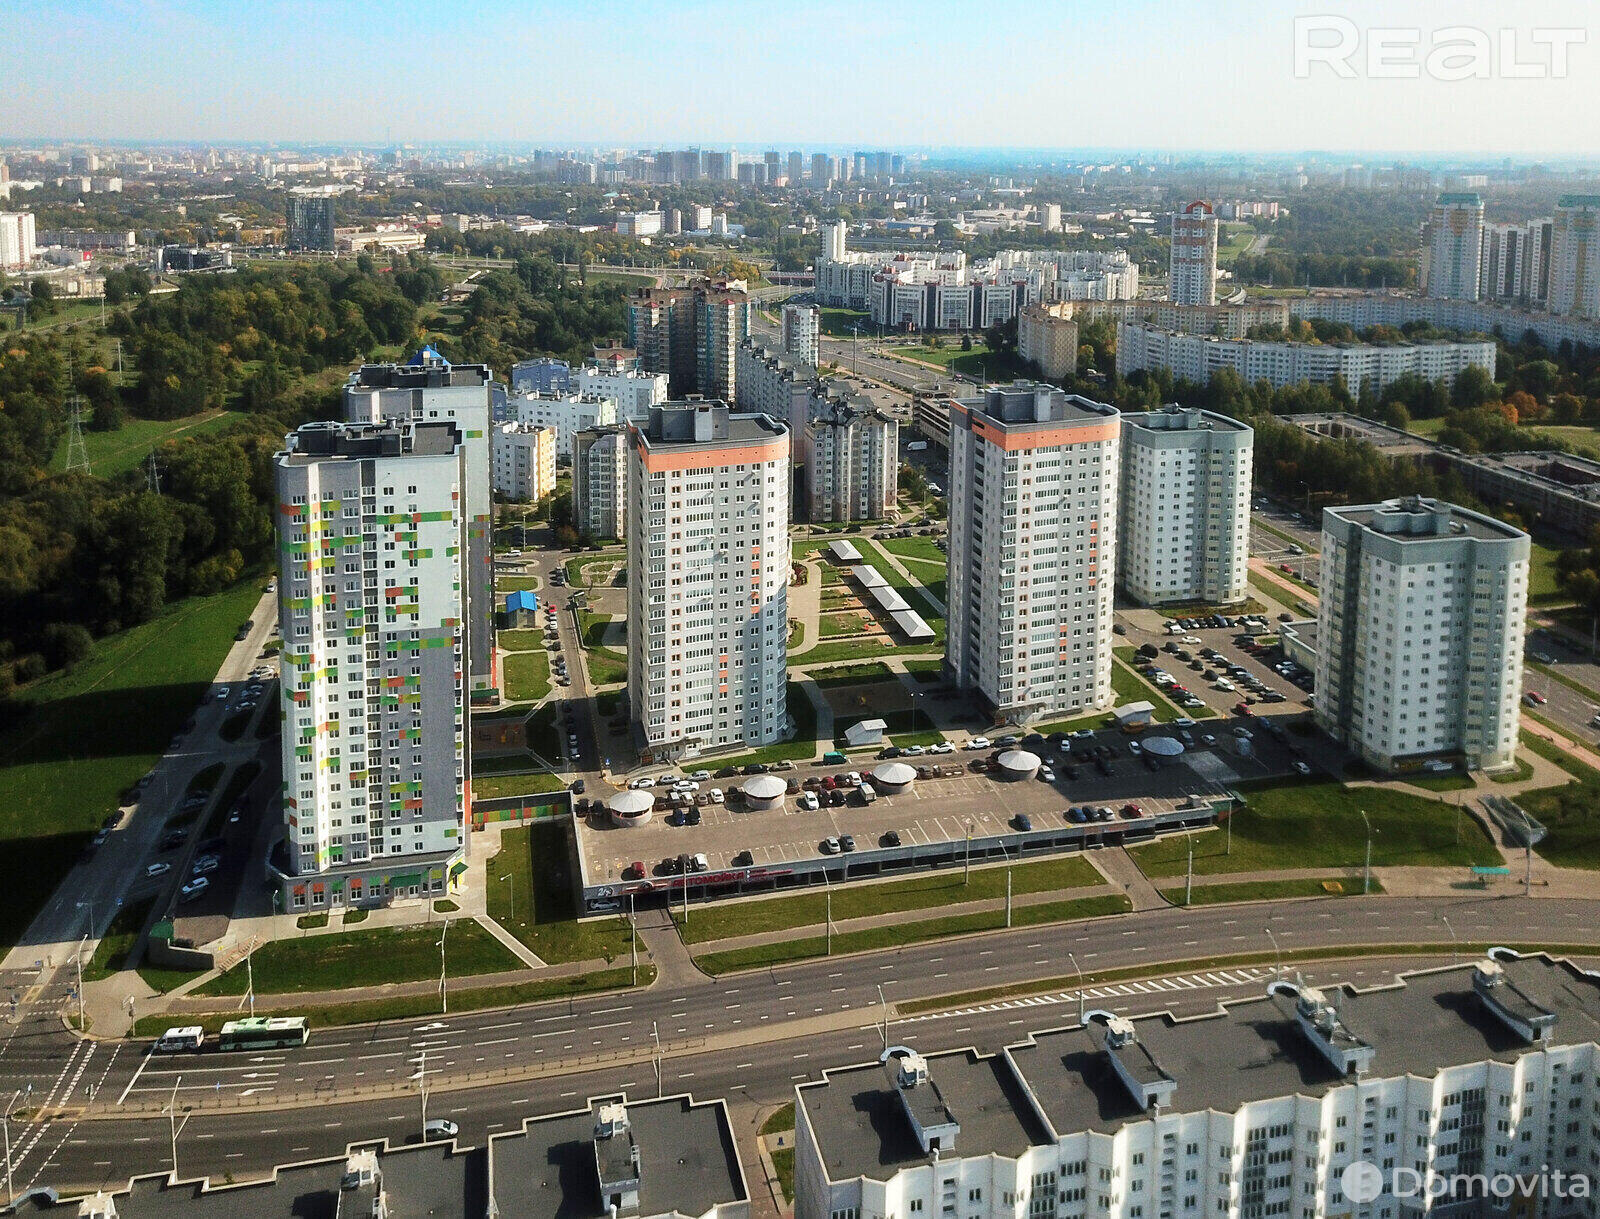 Цена продажи квартиры, Минск, ул. Алибегова, д. 24